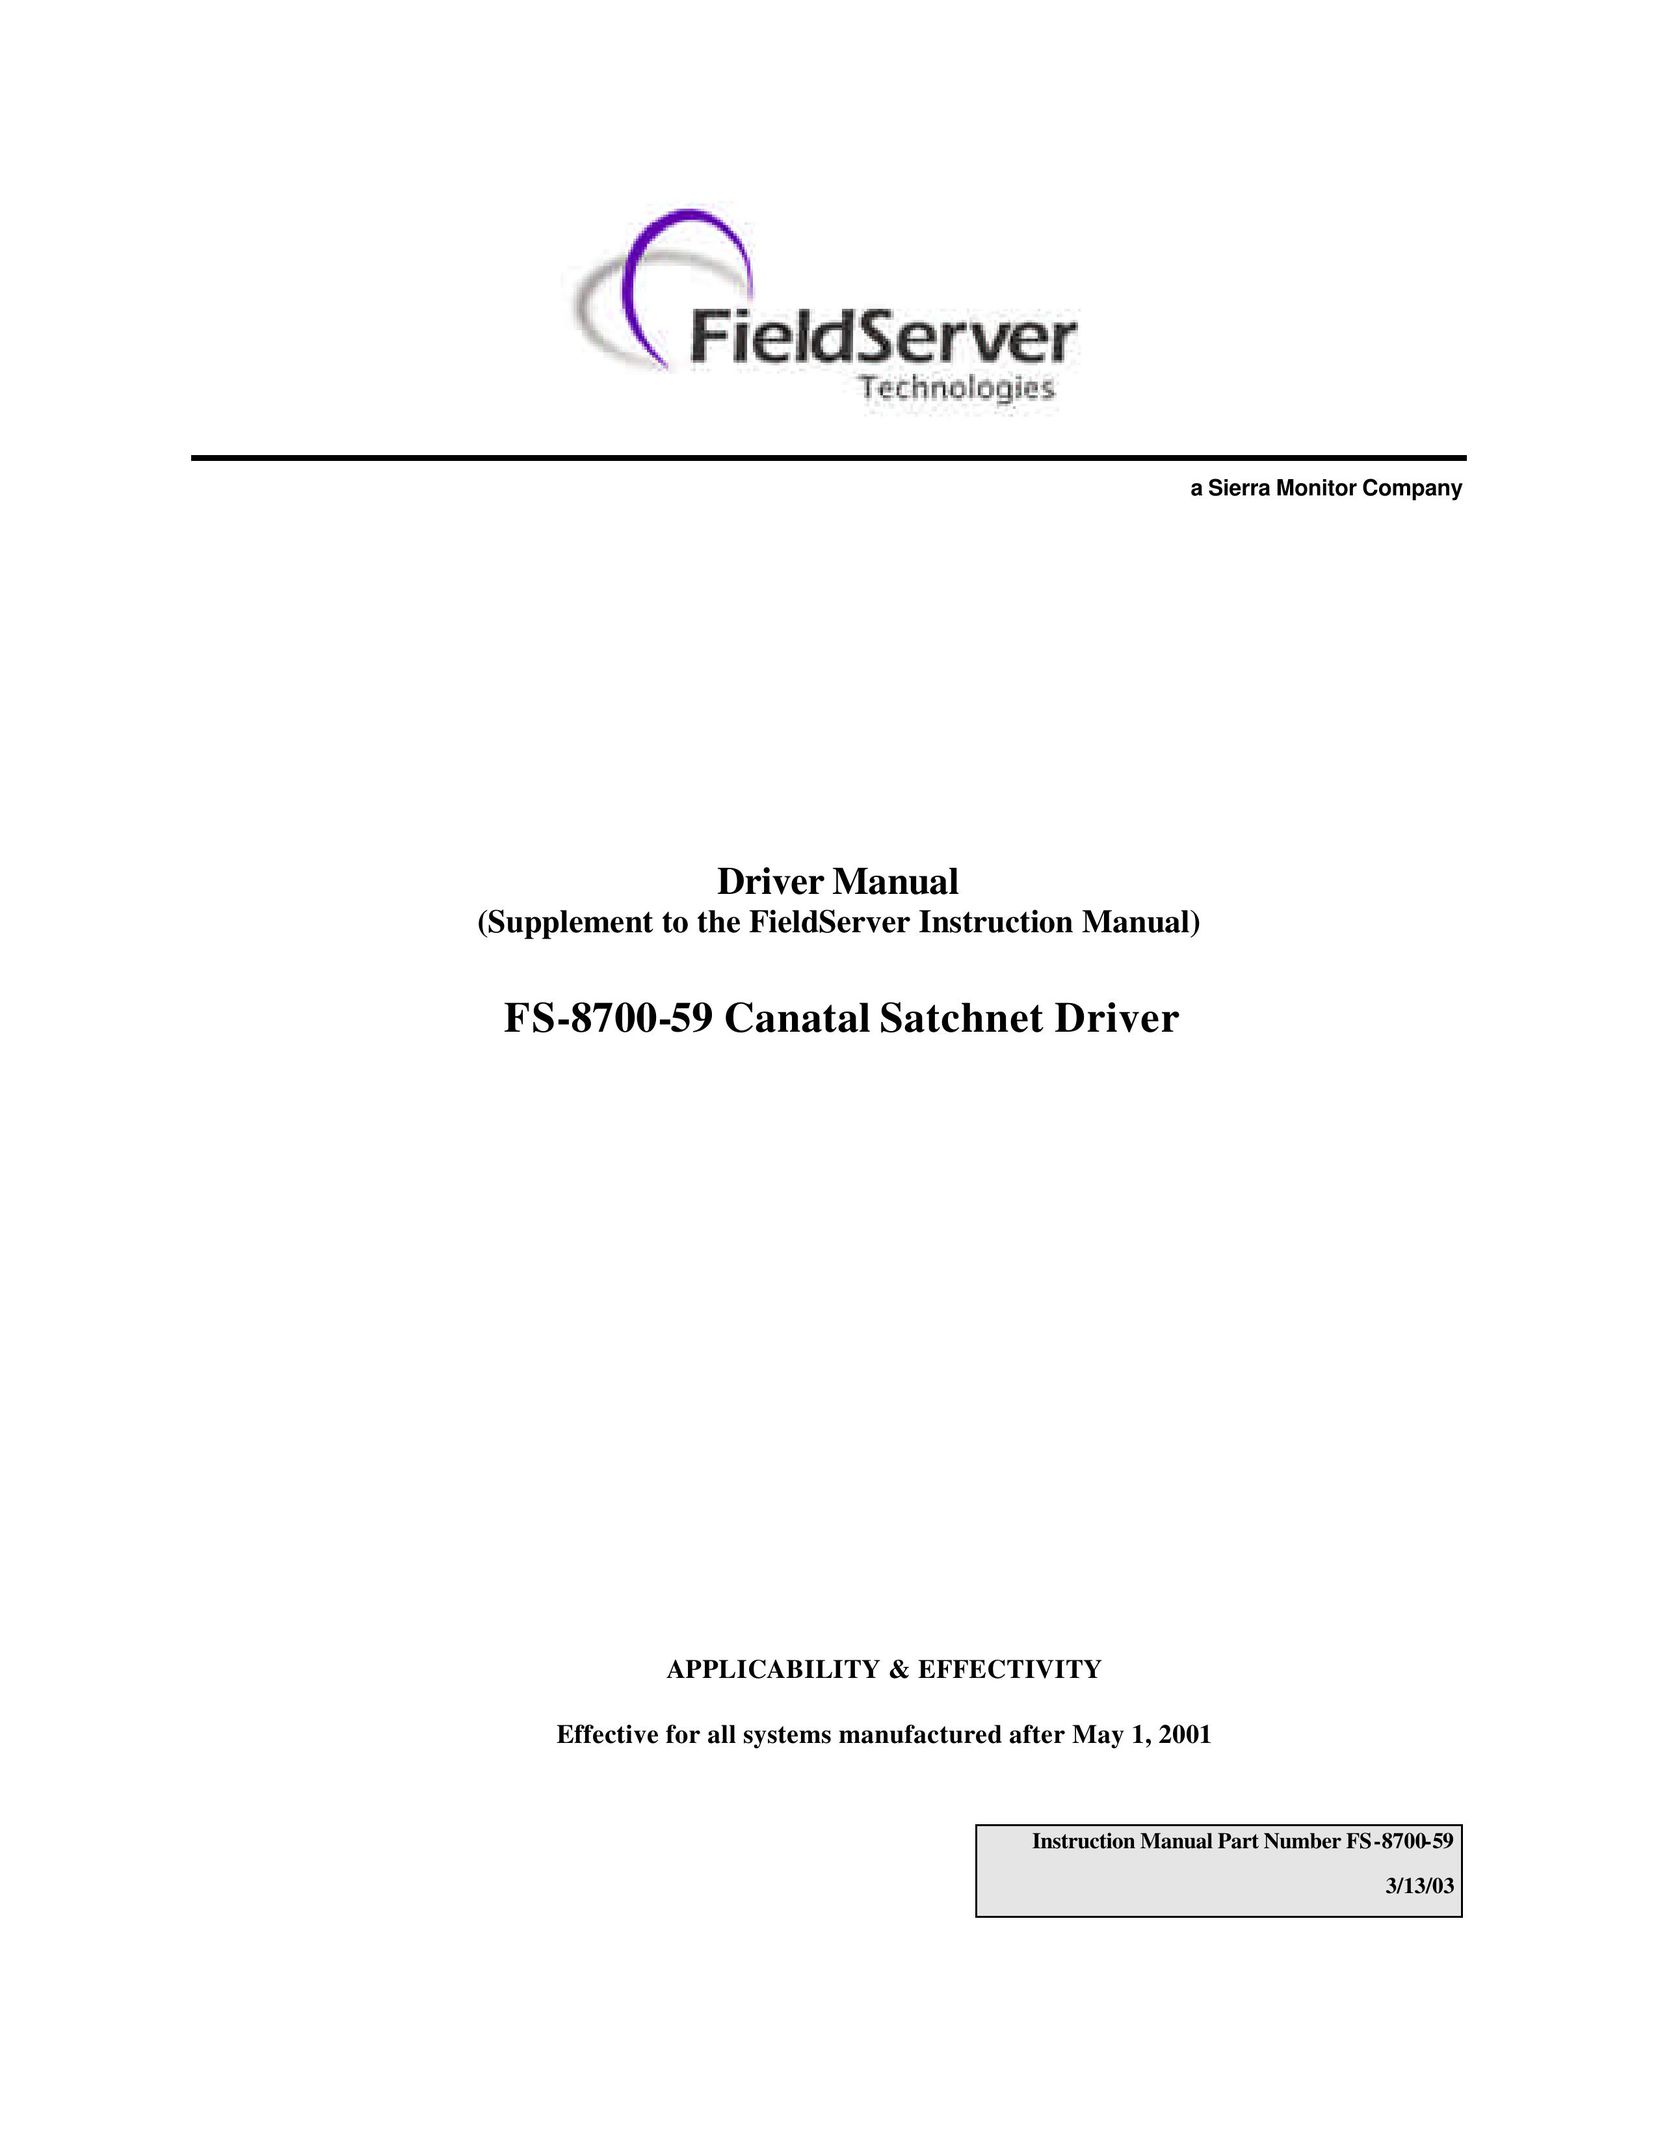 FieldServer FS-8700-59 Computer Drive User Manual